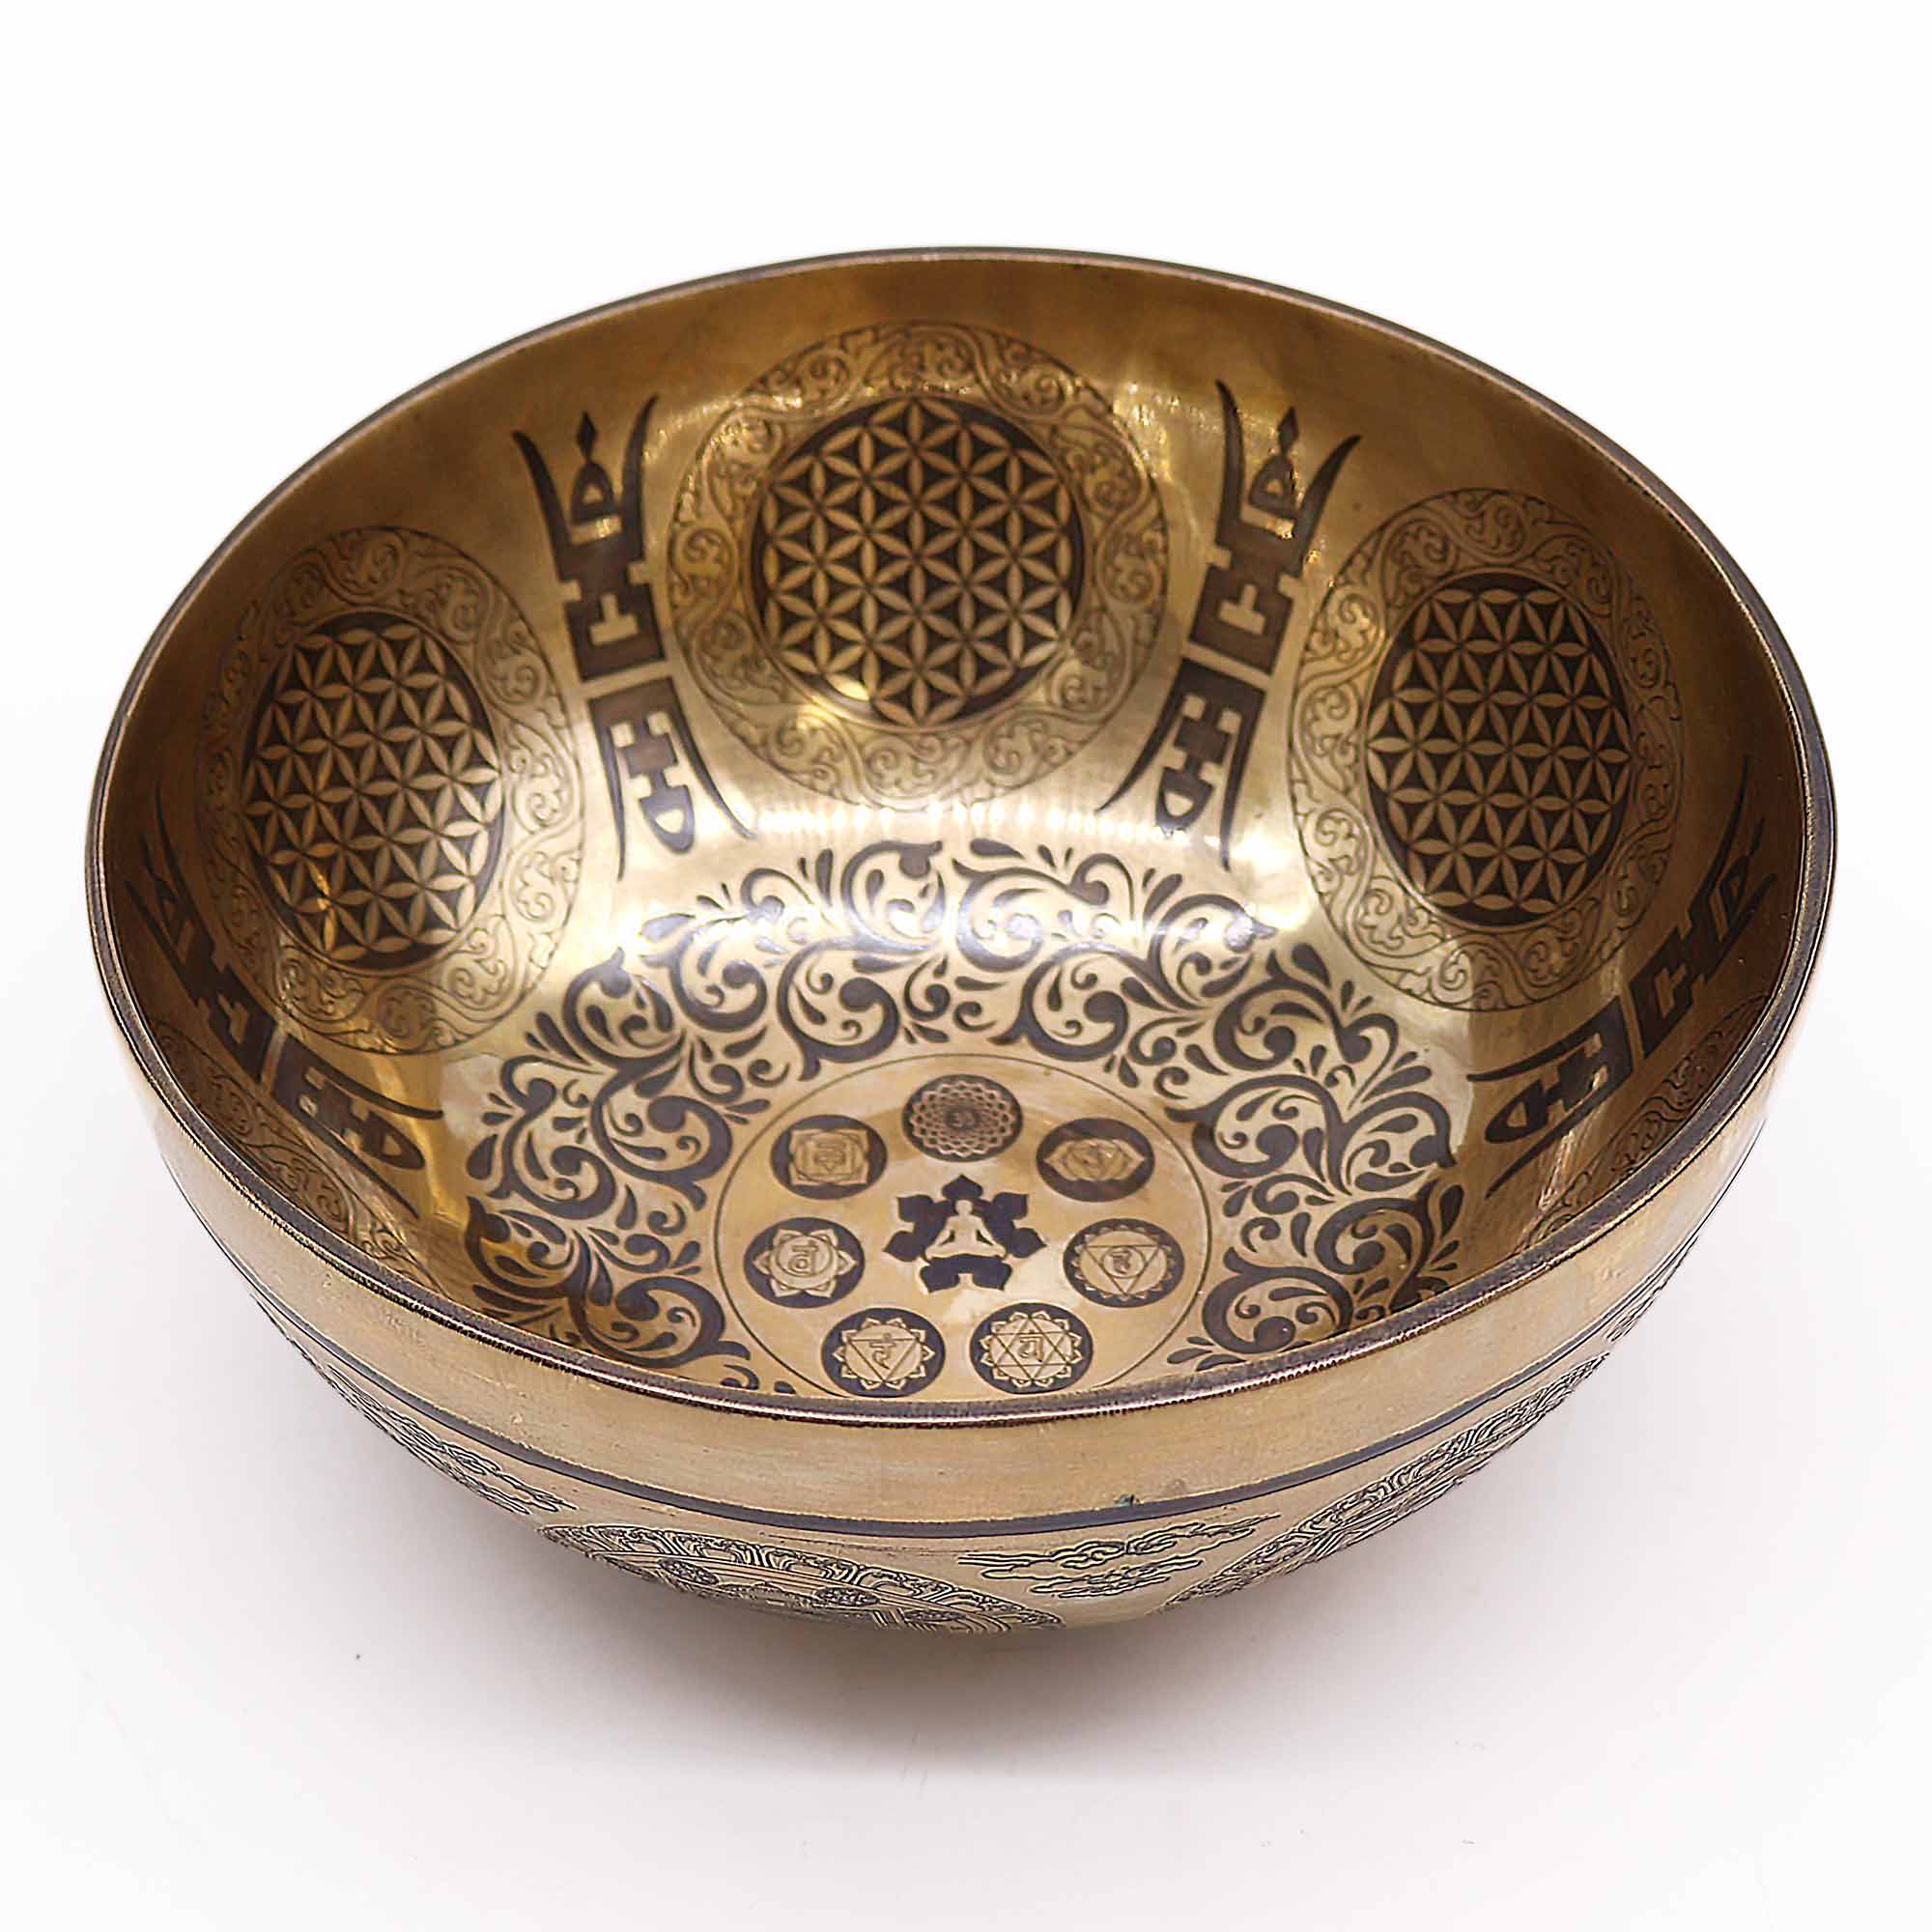 Tibetan Healing Engraved Bowl - 8.3 inches - 7 Chakra & Flower of Life